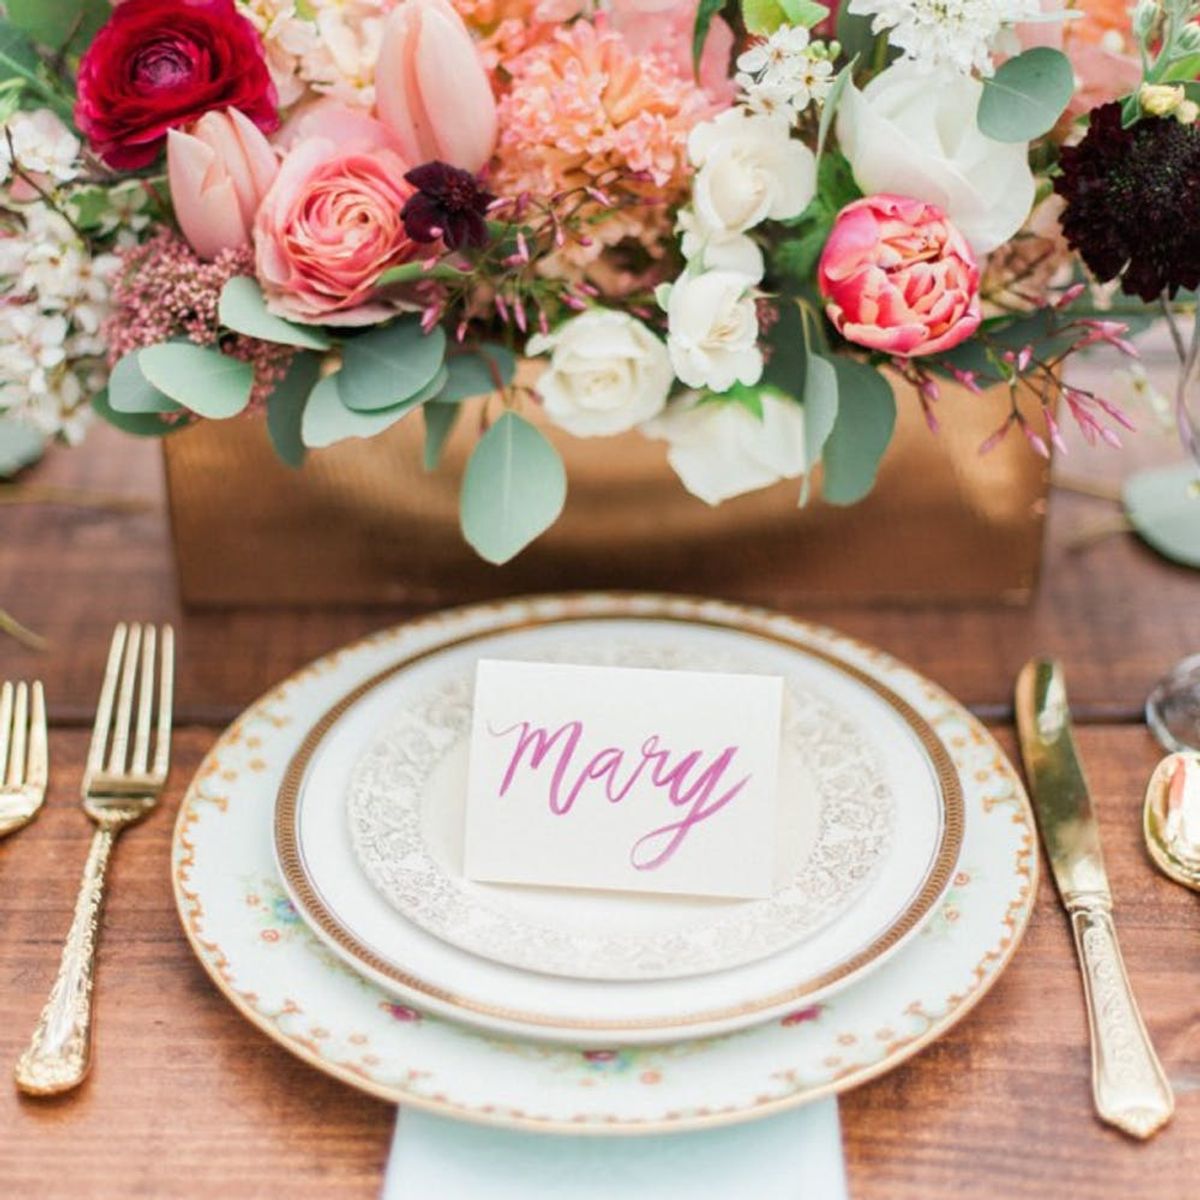 15 Stylish Wedding Table Setting Ideas for Every Couple